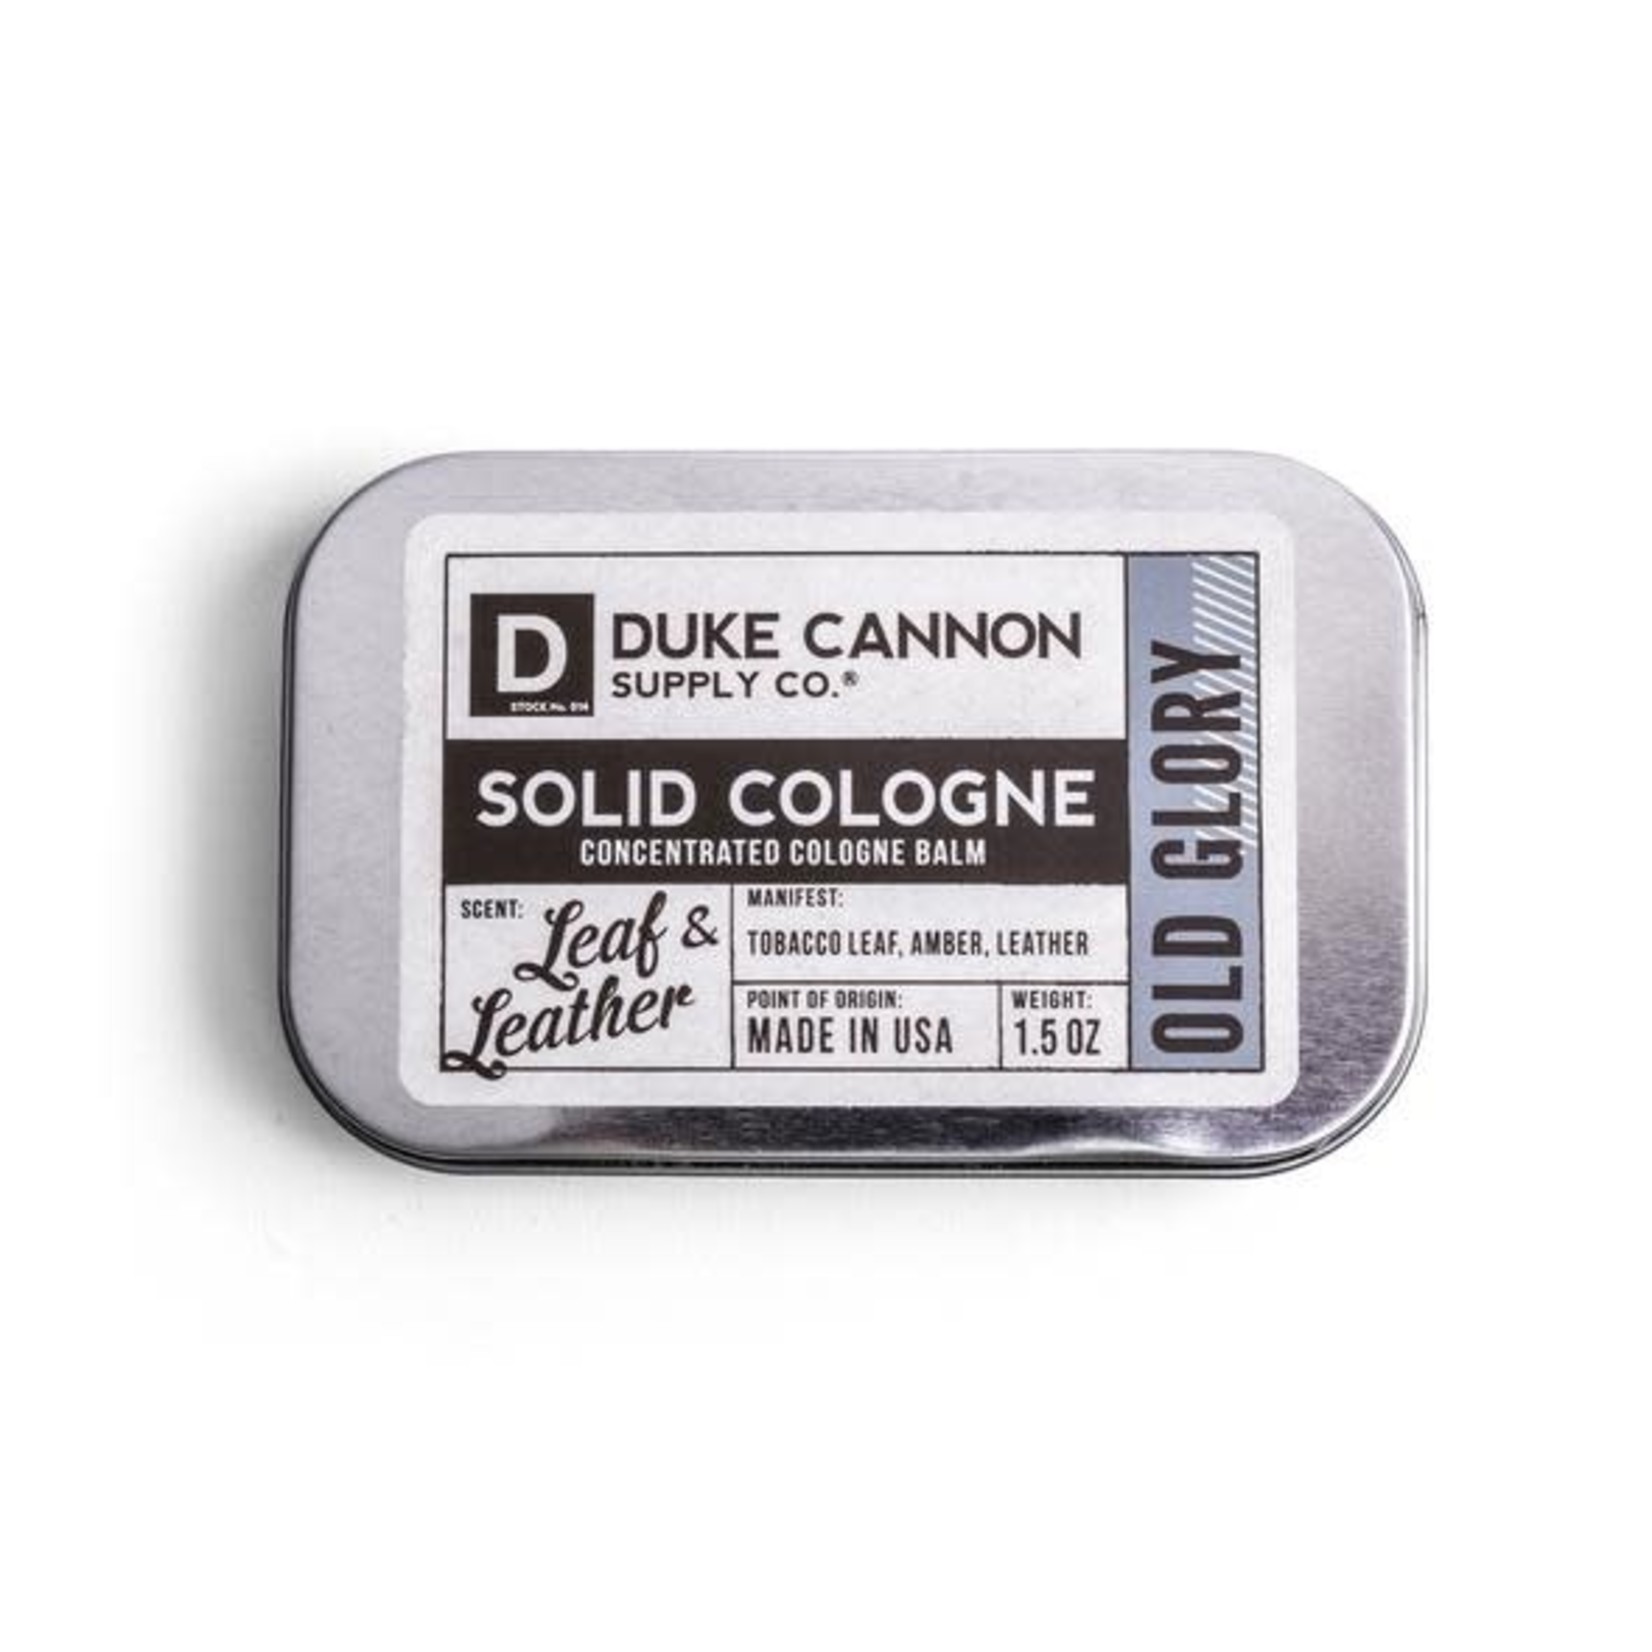 Duke Cannon Duke Cannon Solid Cologne